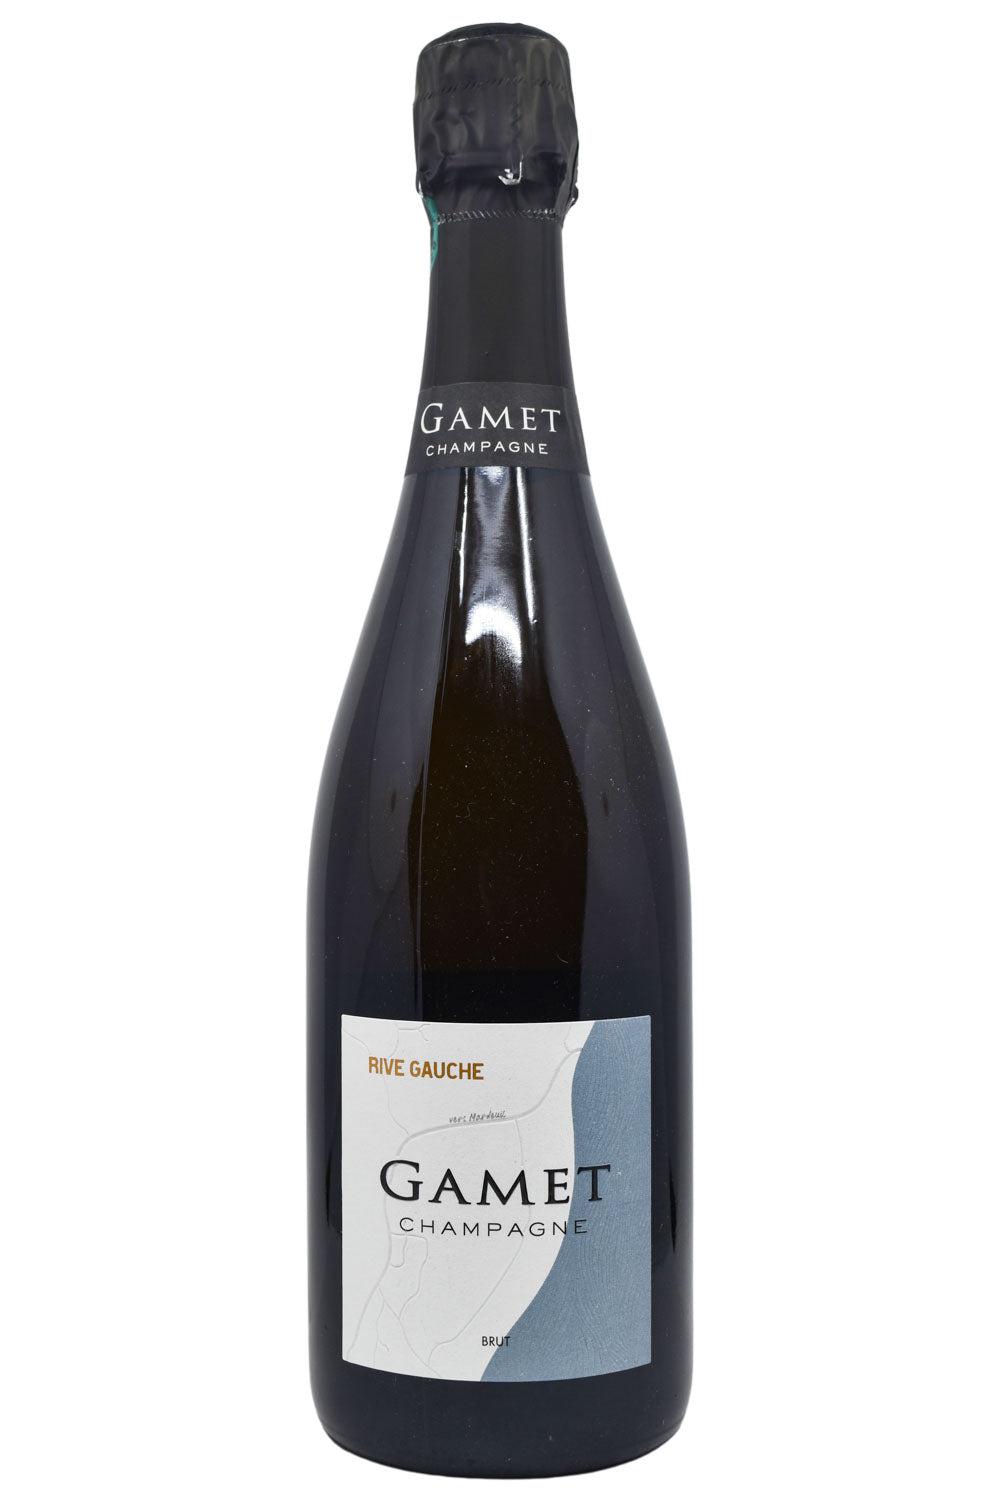 Gamet Champagne Brut Rive Gauche NV